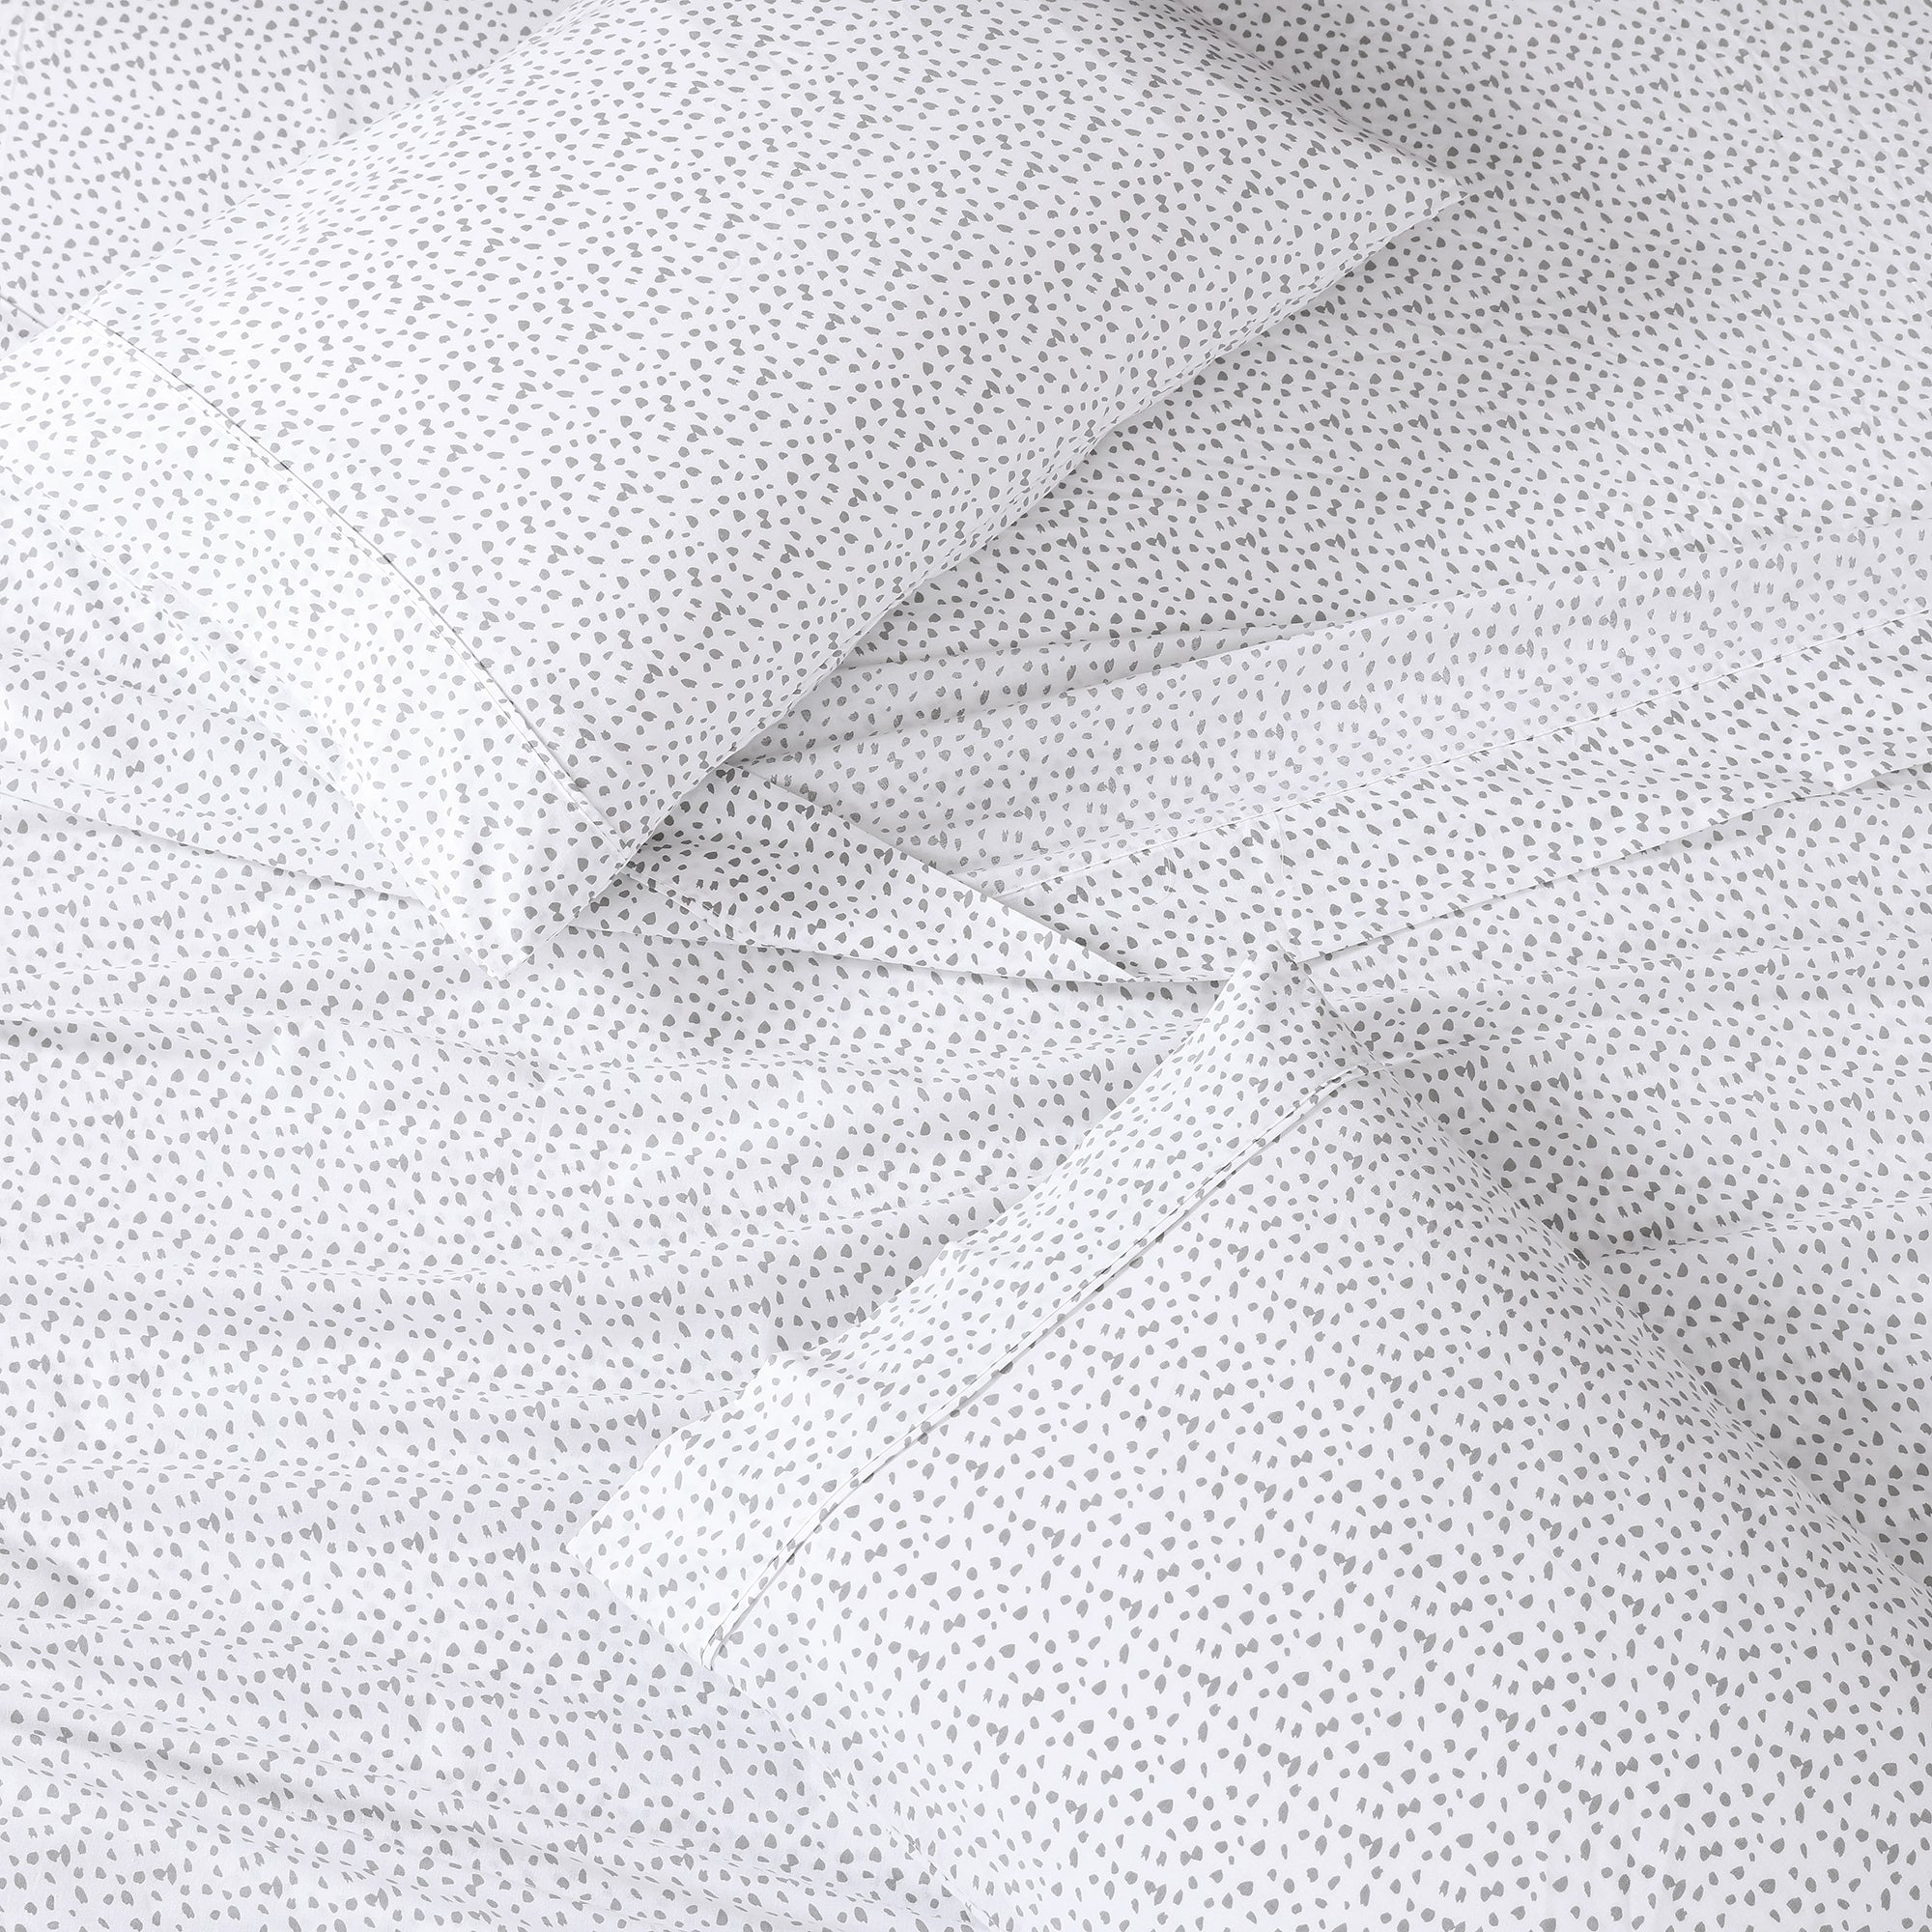 100% Organic Washed Cotton Sheet Set - Haze Grey